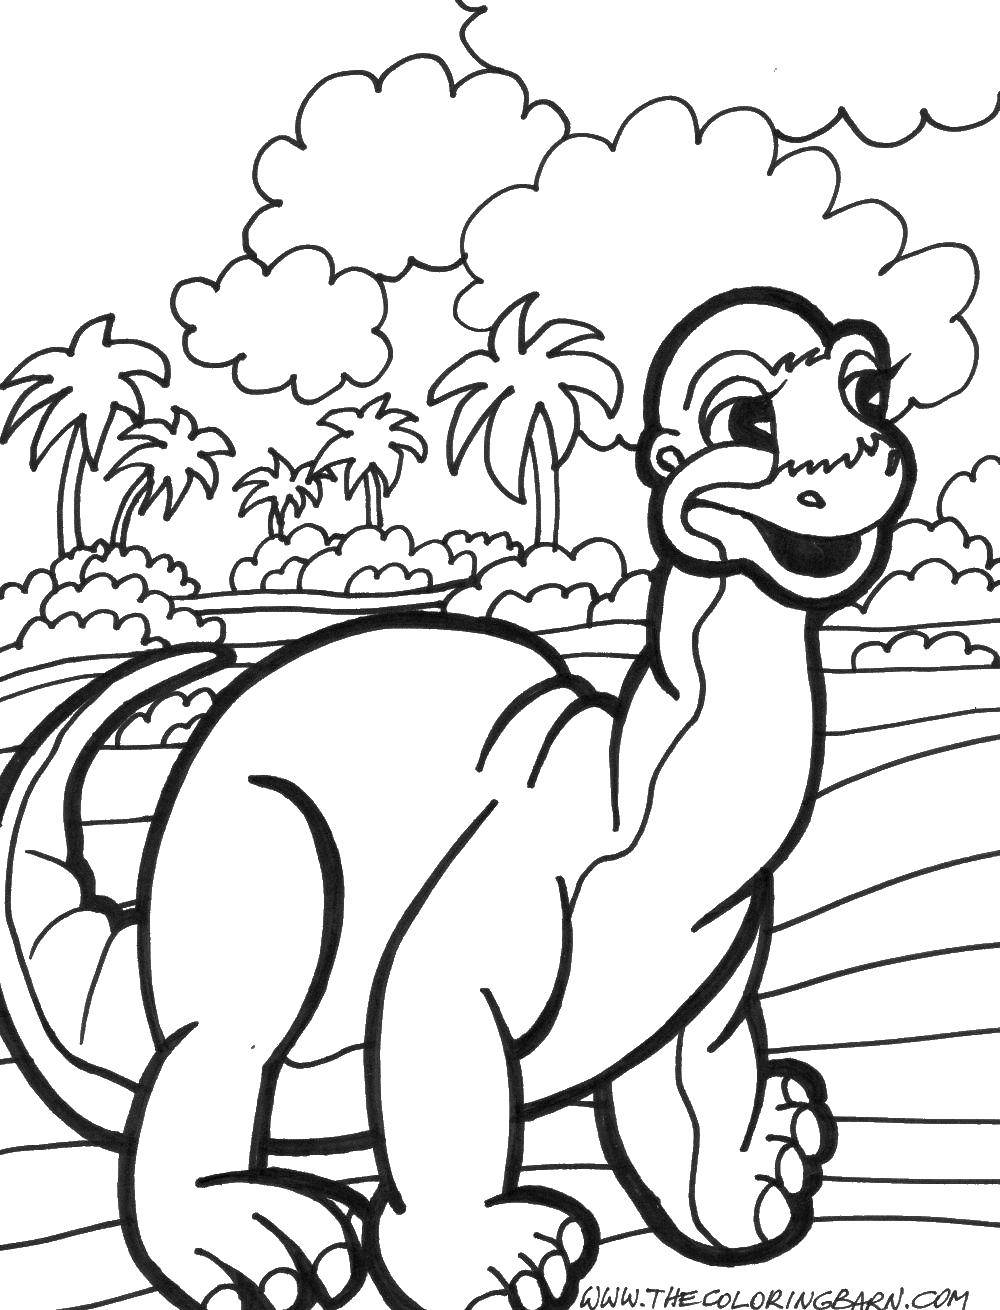 Coloring A baby dinosaur. Category Cartoon character. Tags:  cartoon baby dinosaur.